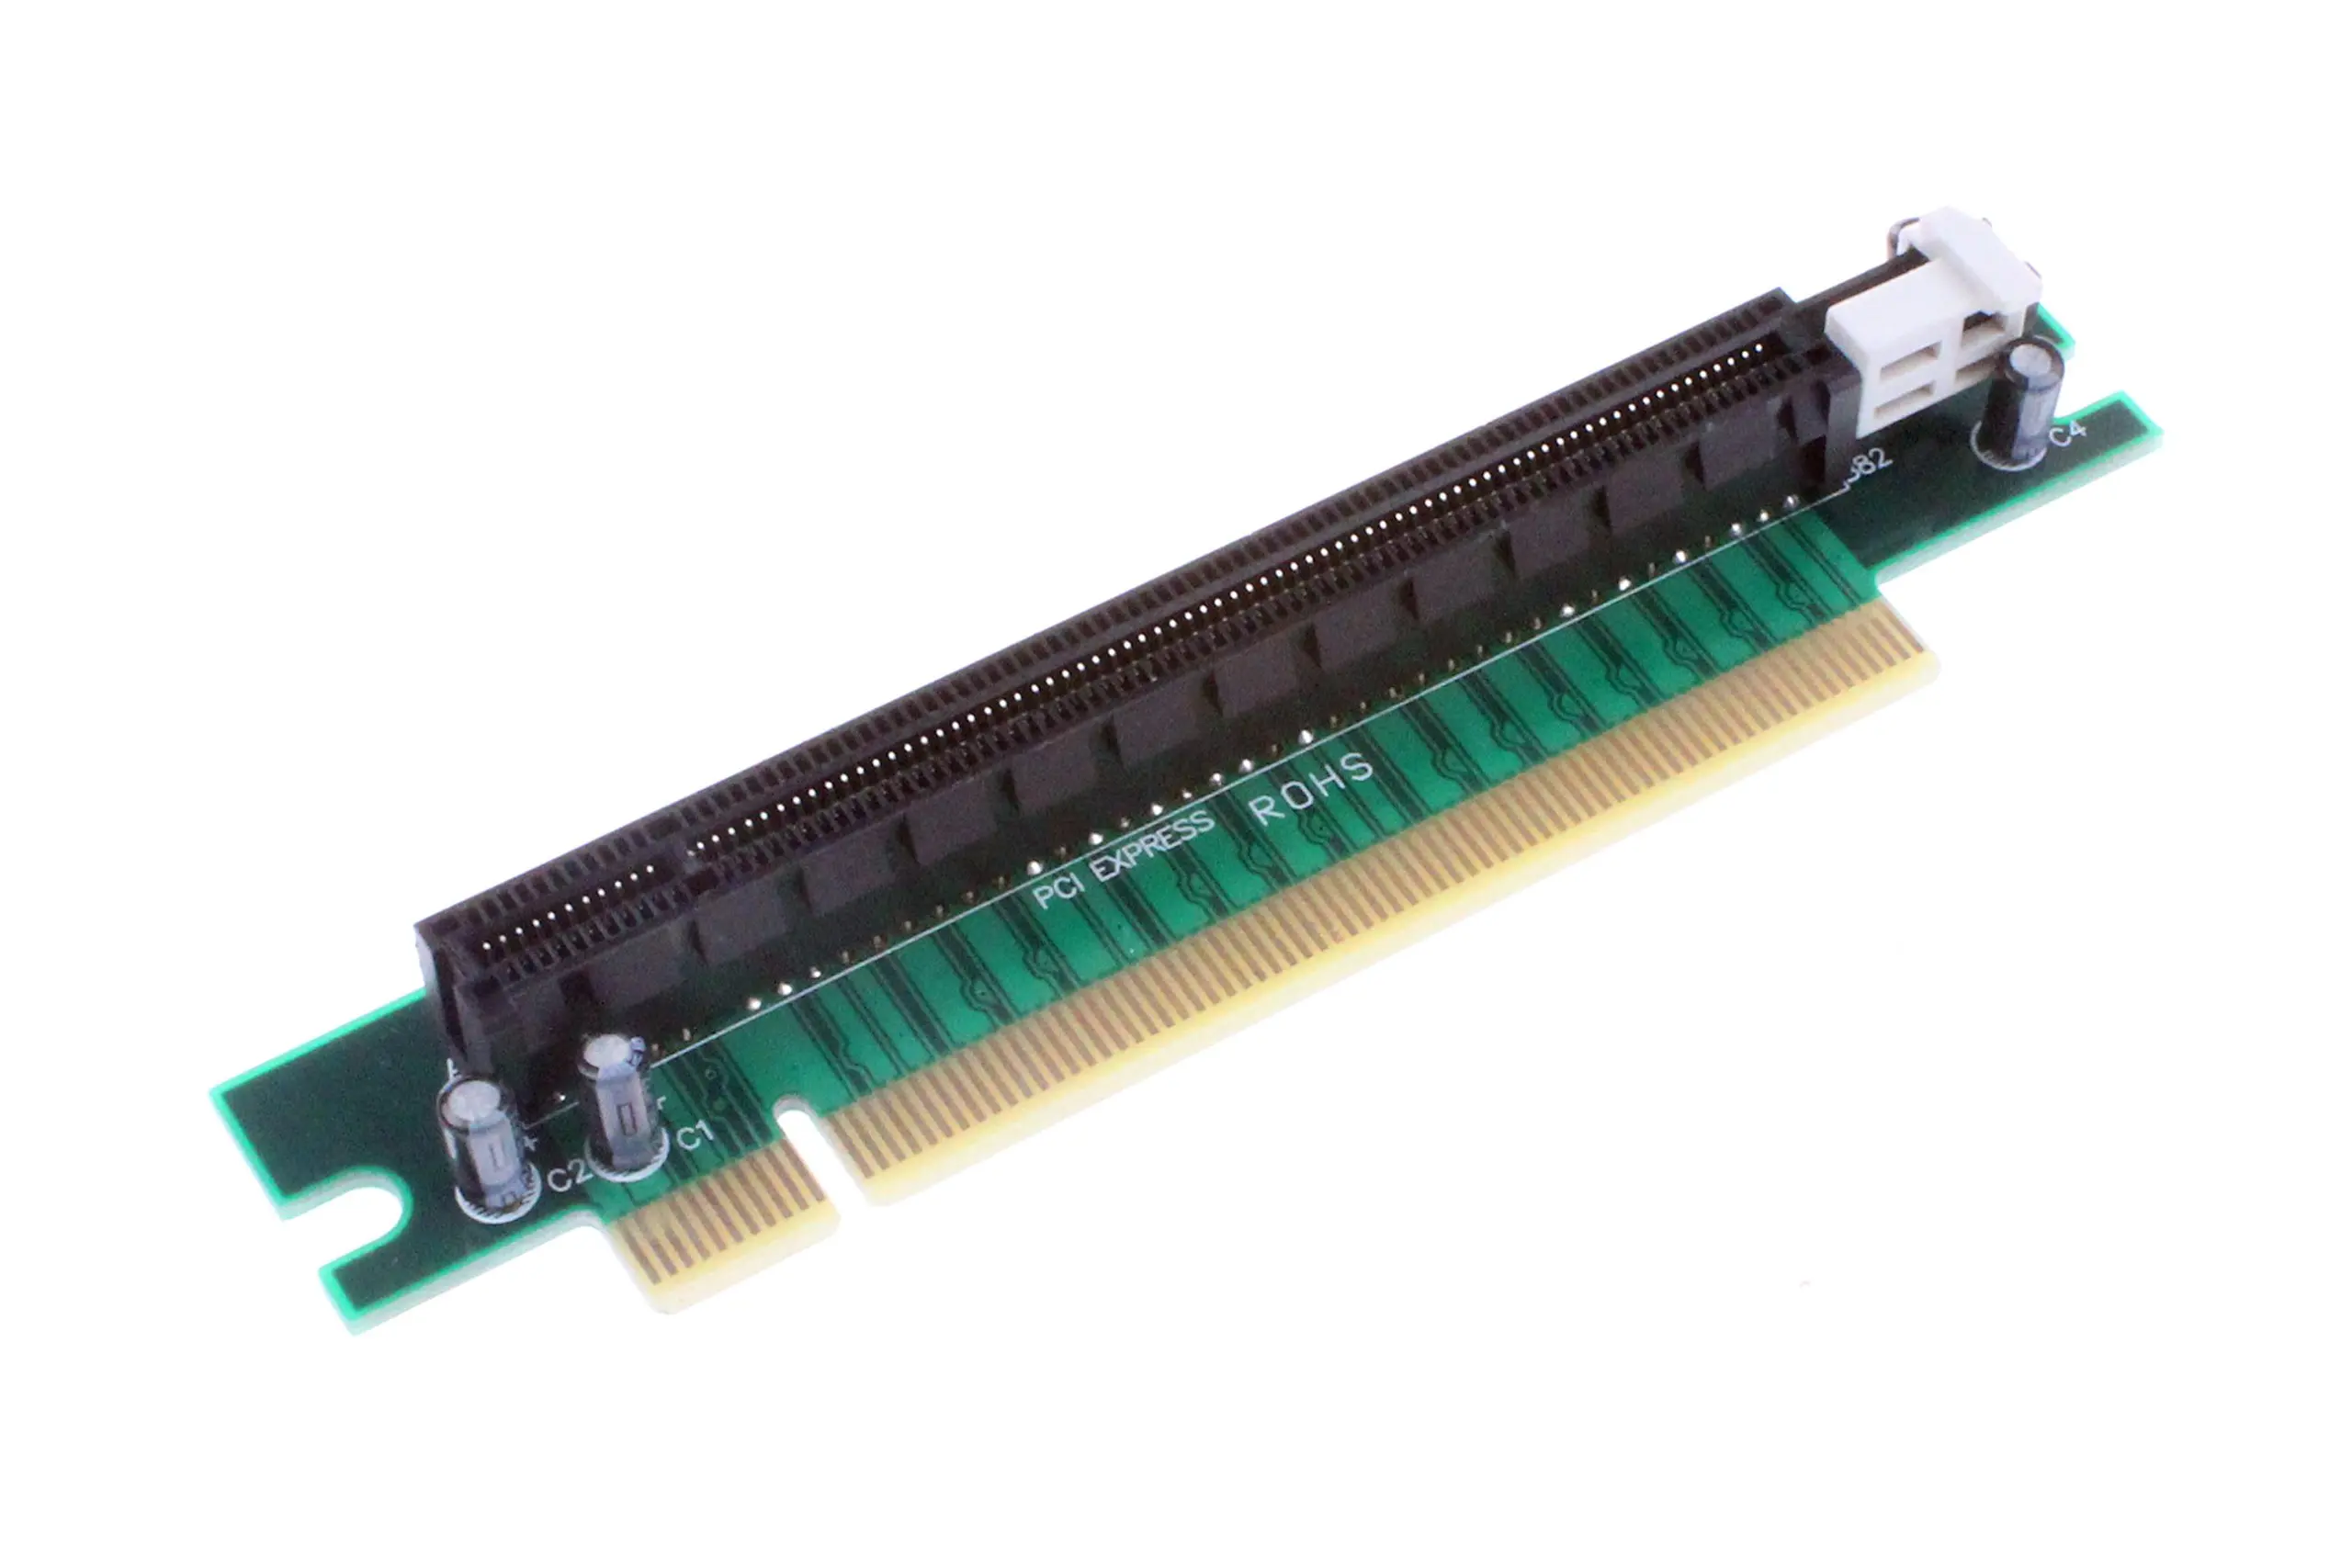 Pci definition. 3 Слота PCI-E x16. PCI Express x16 райзер. Слот PCI Express x16. Угловой райзер PCI-E 1u.